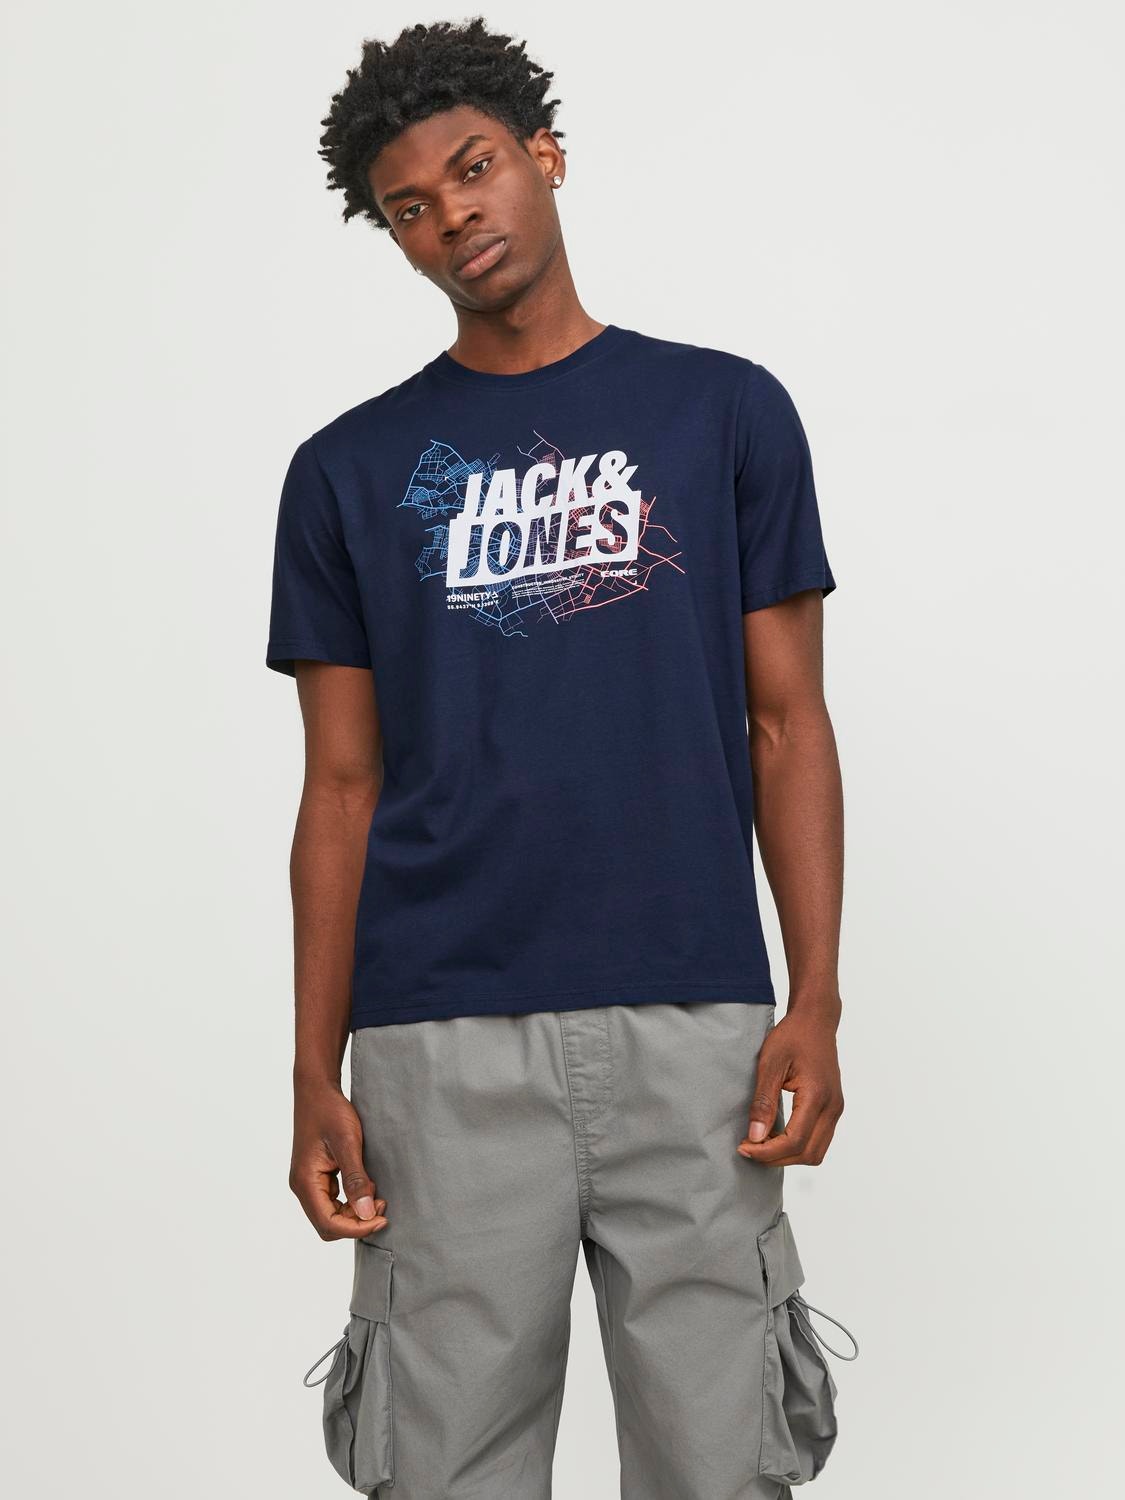 Jack & Jones Printed Crew neck T-shirt -Navy Blazer - 12252376